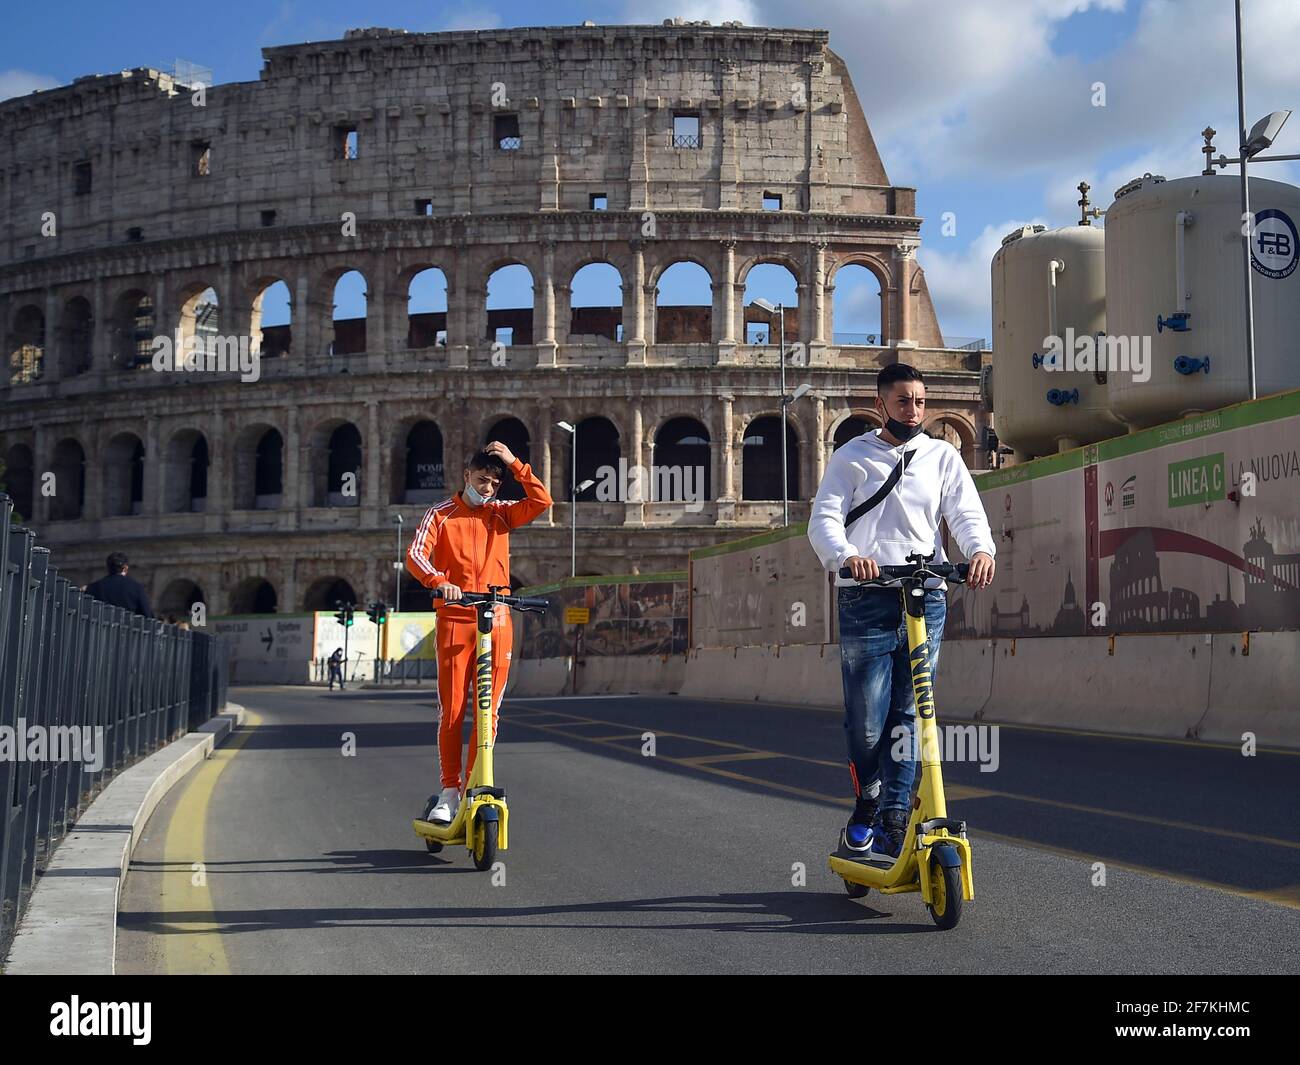 Italy, Rome, March 13, 2021 : People riding an electric scooter near the Coliseum area   Photo © Fabio Mazzarella/Sintesi/Alamy Stock Photo Stock Photo